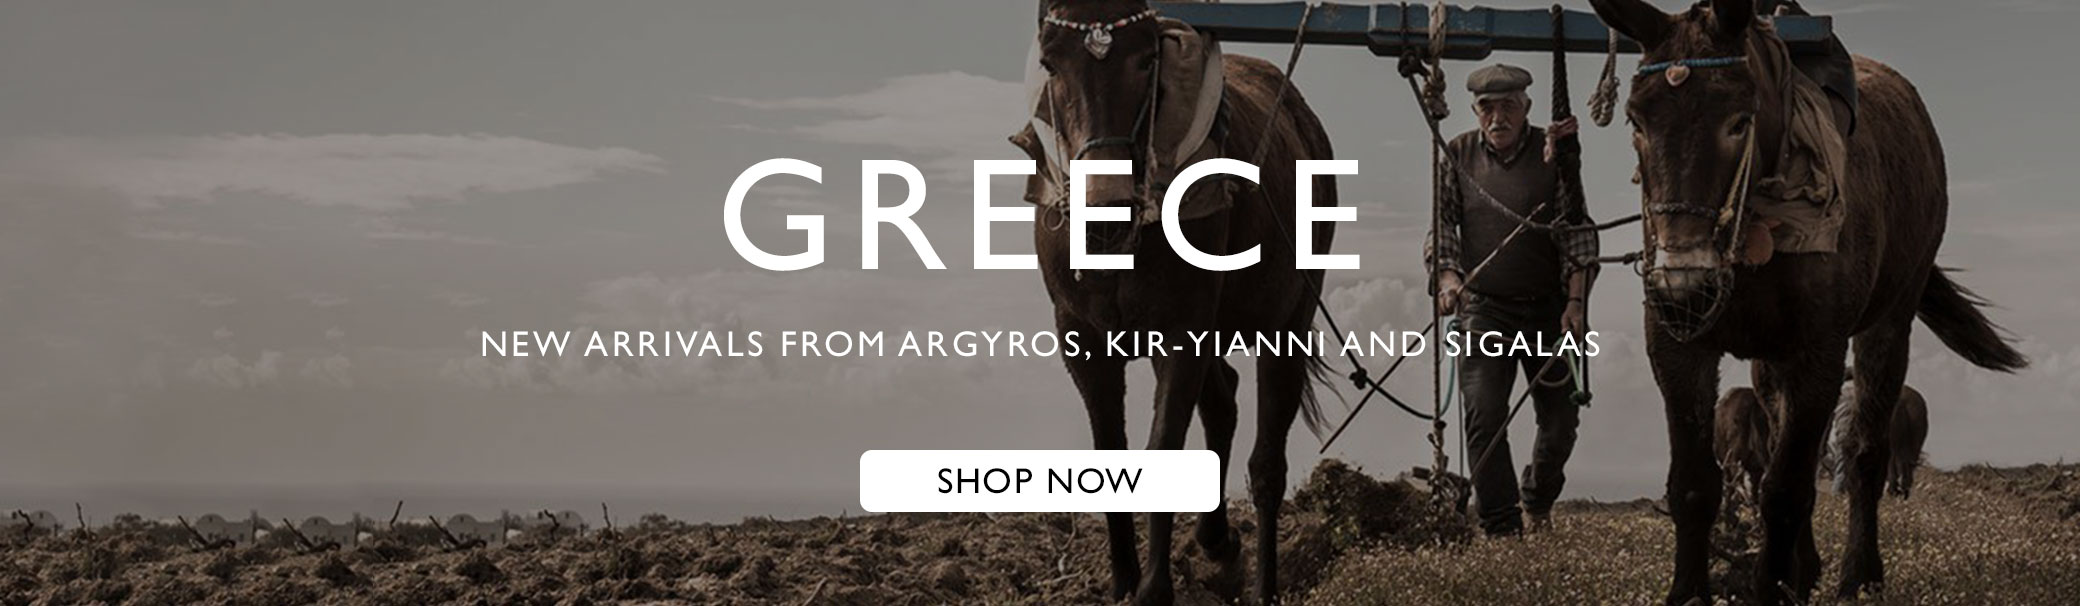 Greece - New Arrivals